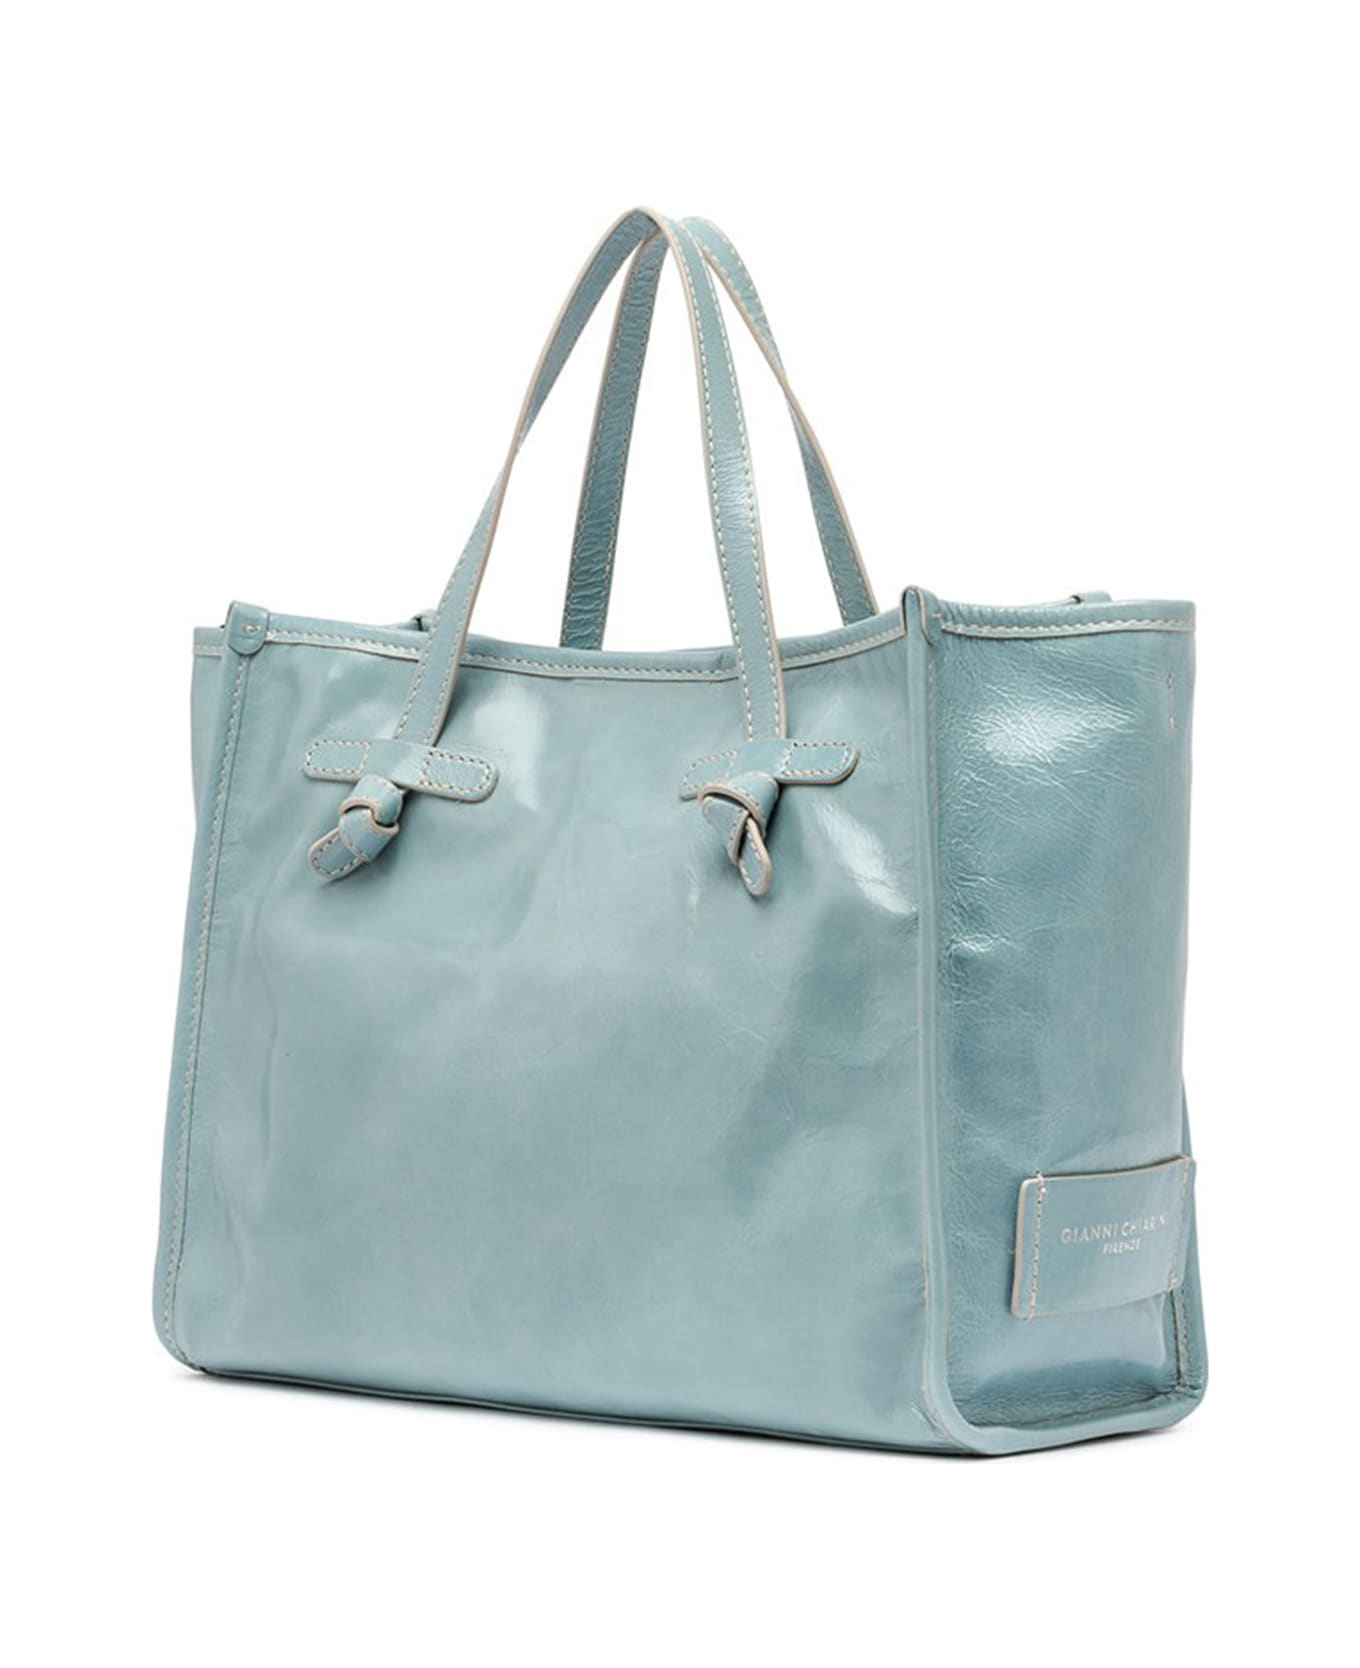 Gianni Chiarini Marcella Shopping Bag In Translucent Leather - AZUR